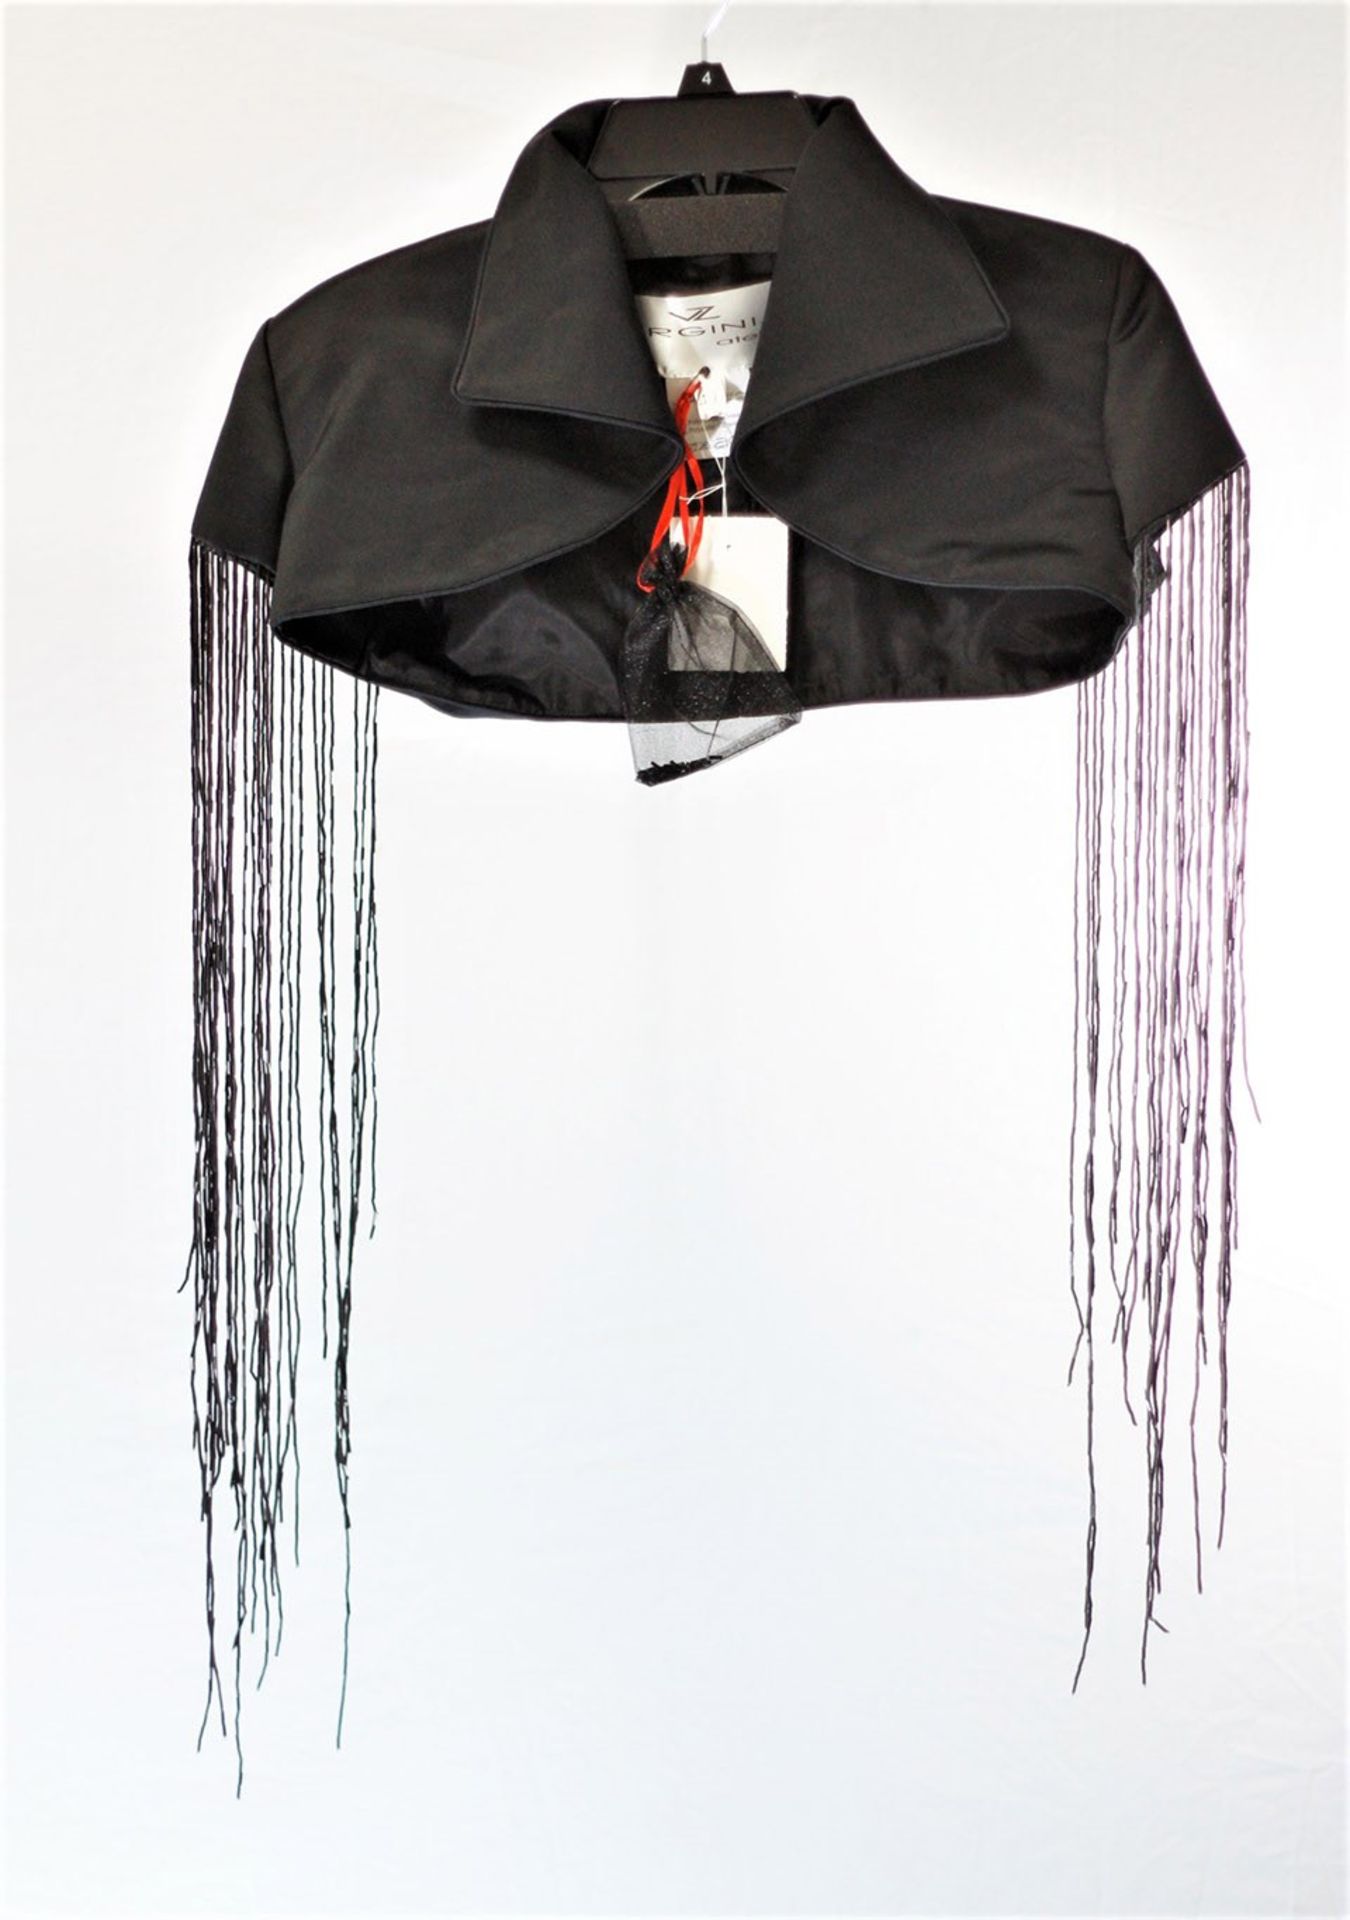 1 x Virginia Atelier Black Bolero - Size: 12 - Material: 50% Nylon, 50% Polyester - From a High